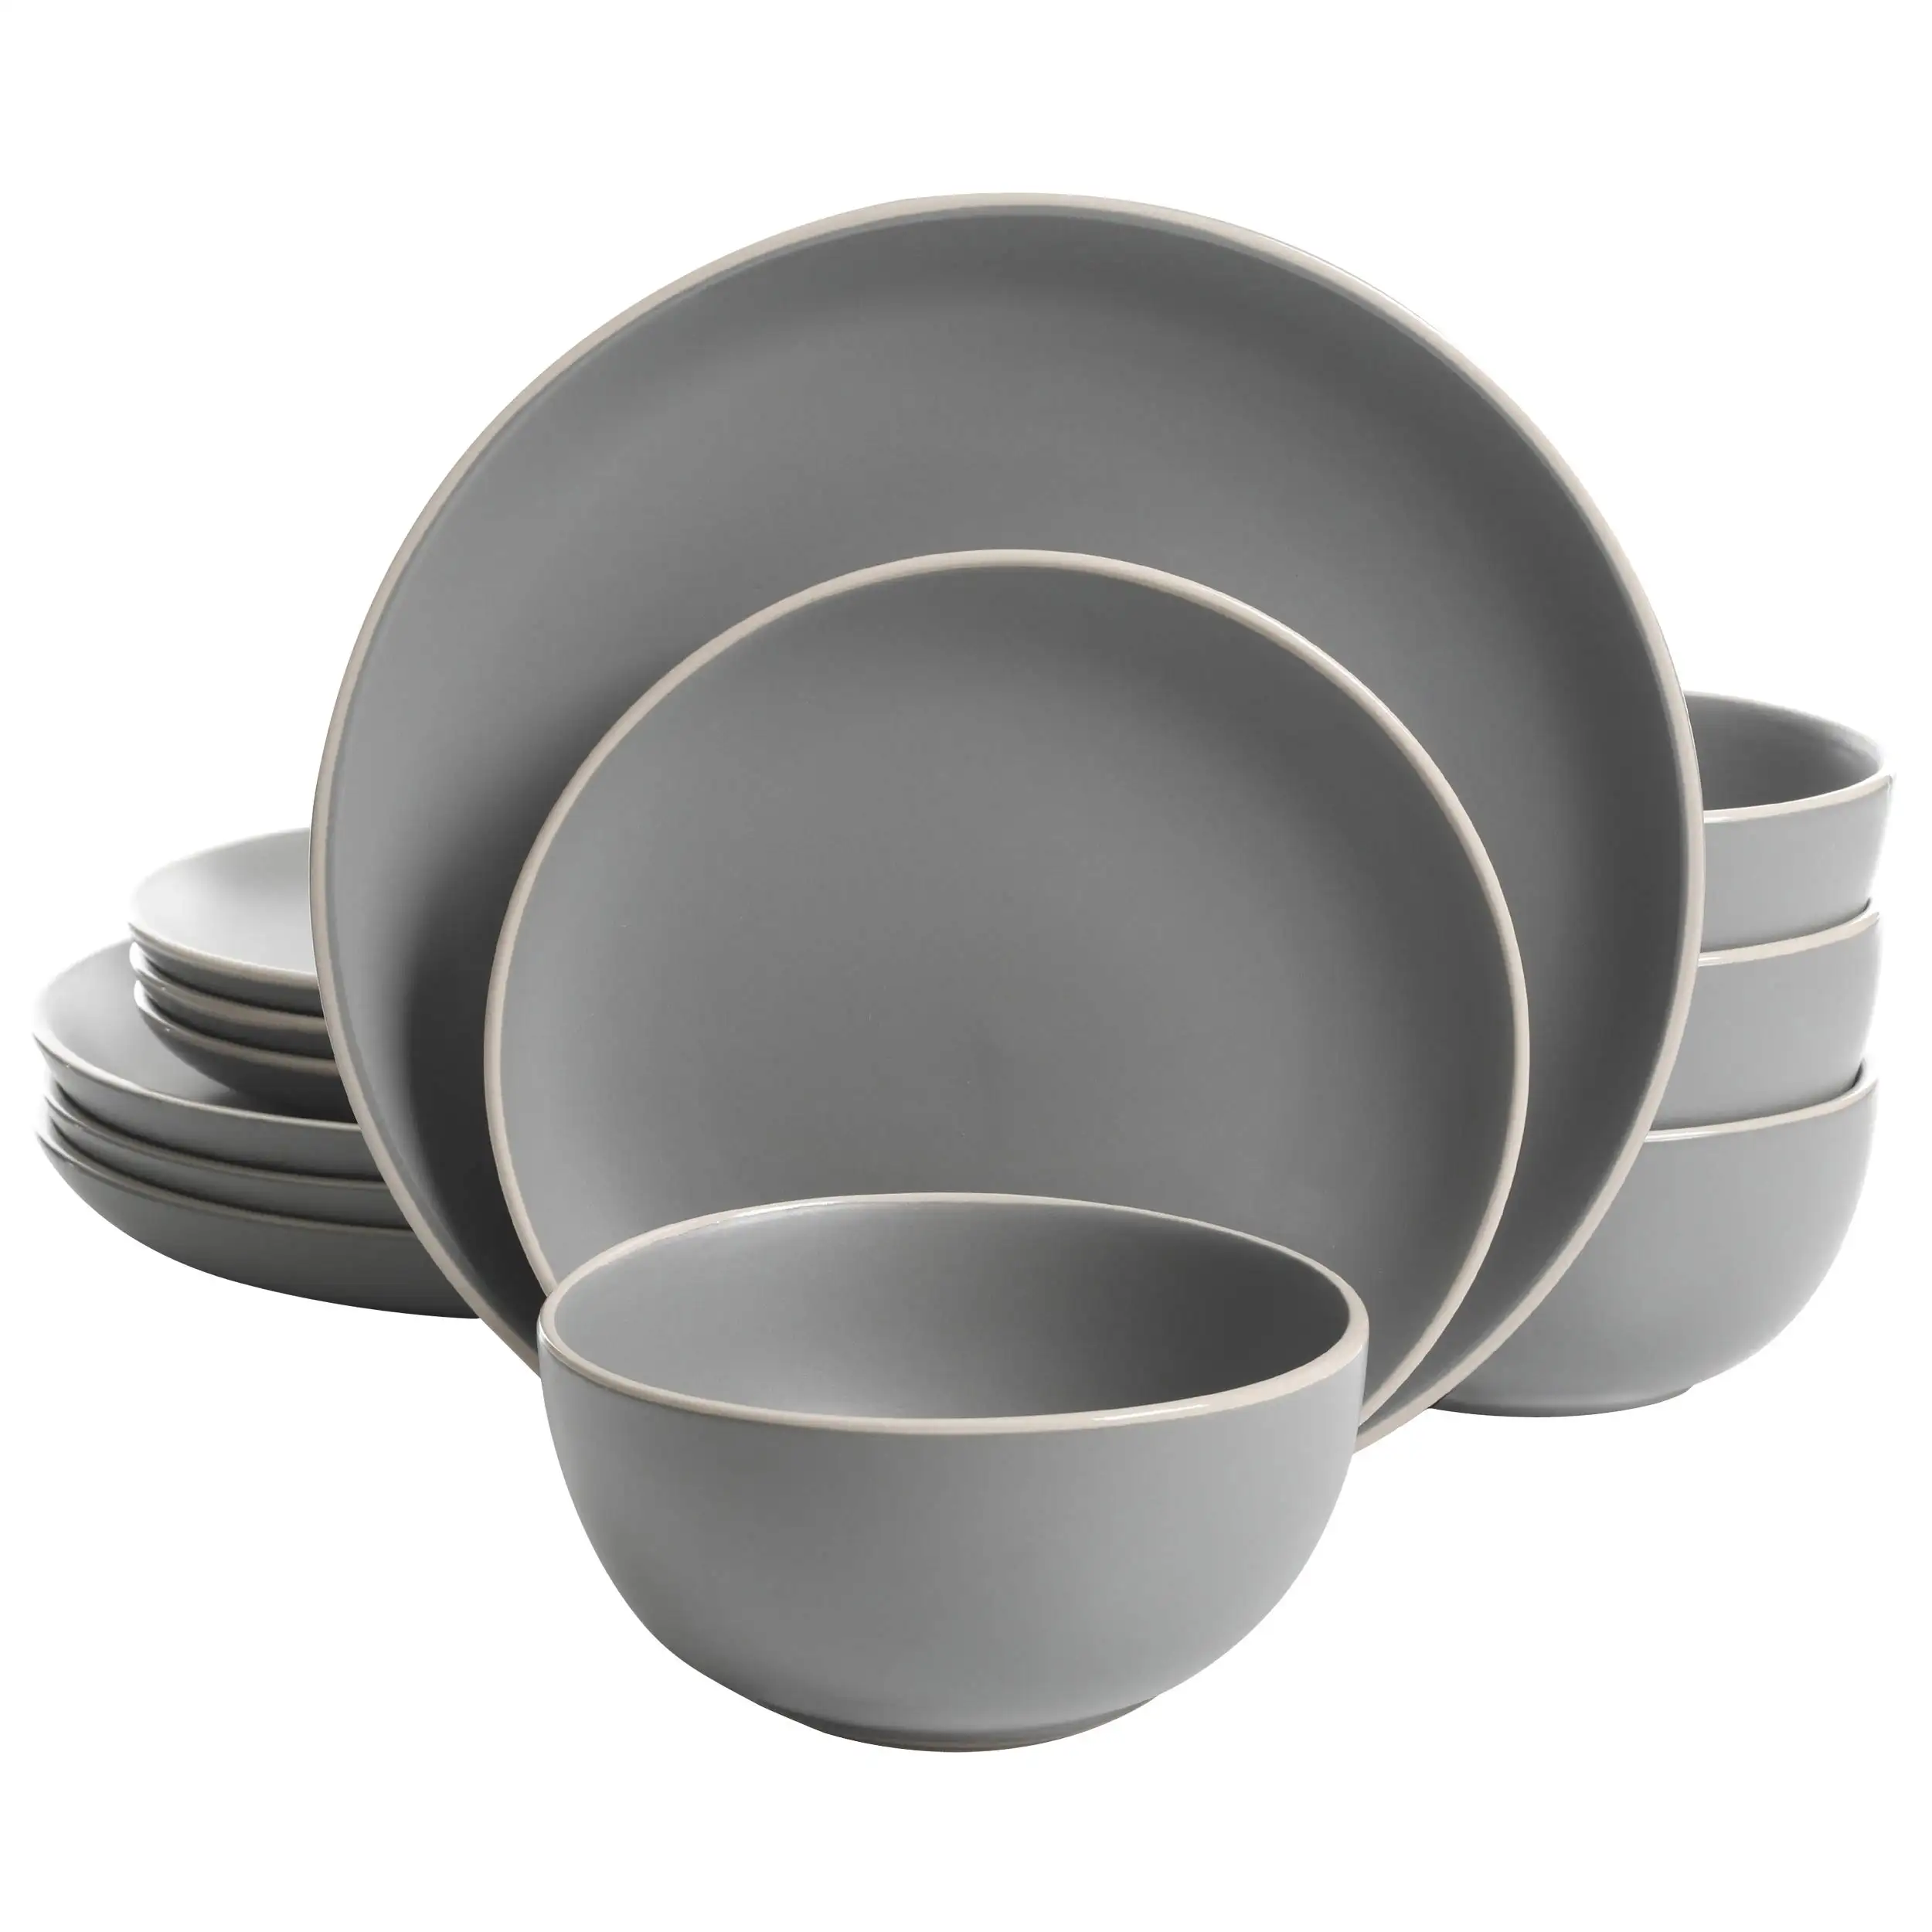 restaurant suppliers high quality round plates sets dinnerware wedding melamine plate and bowl for kitchen dinnerware